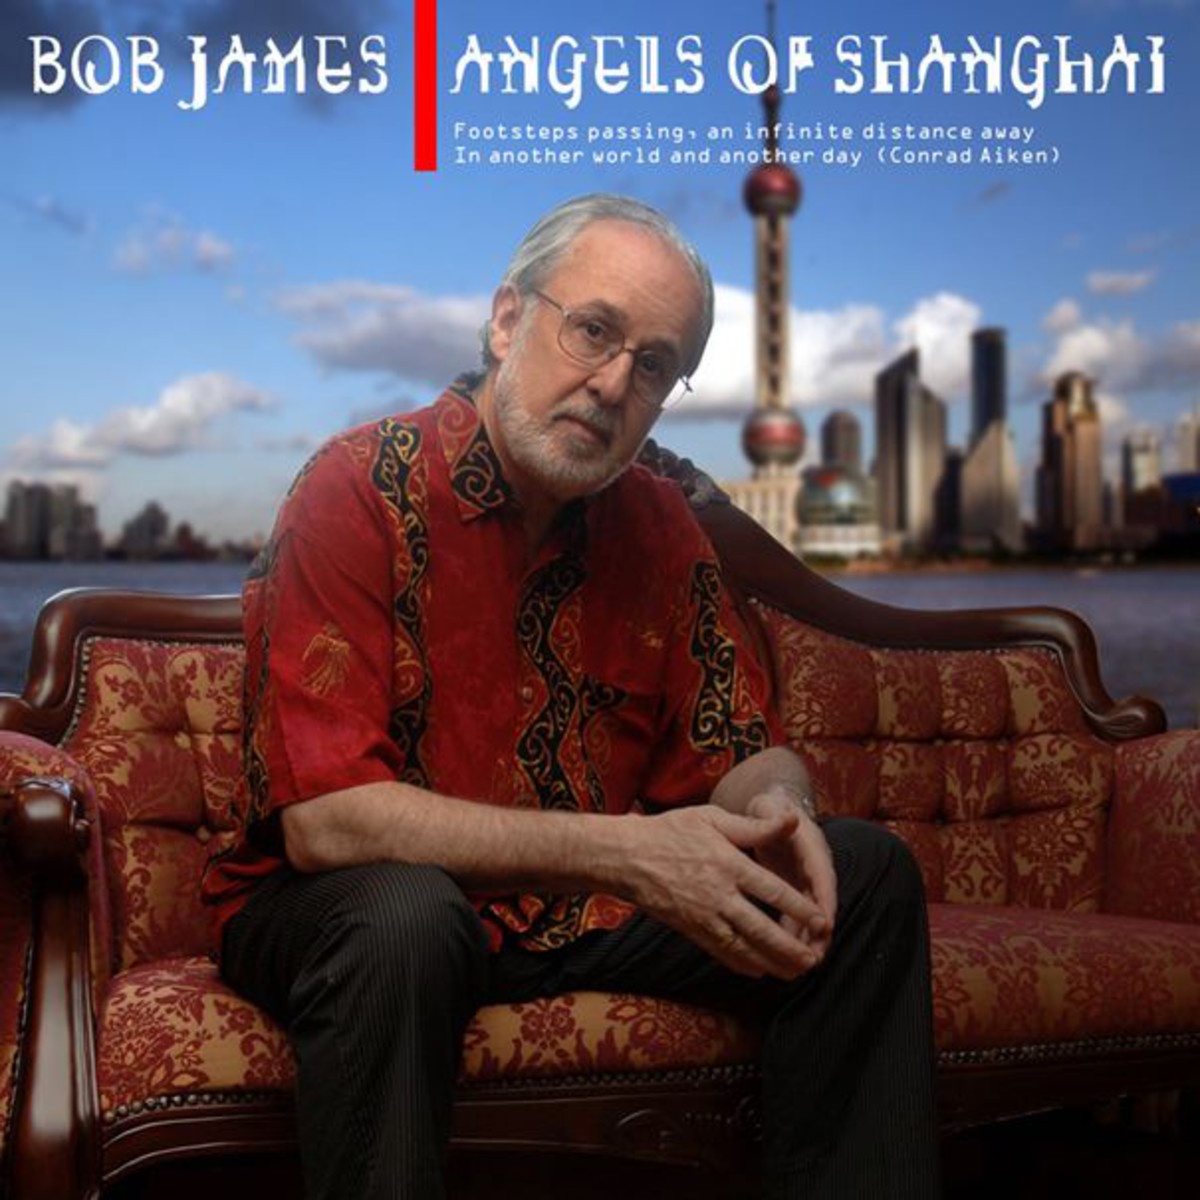 Angels of Shanghai